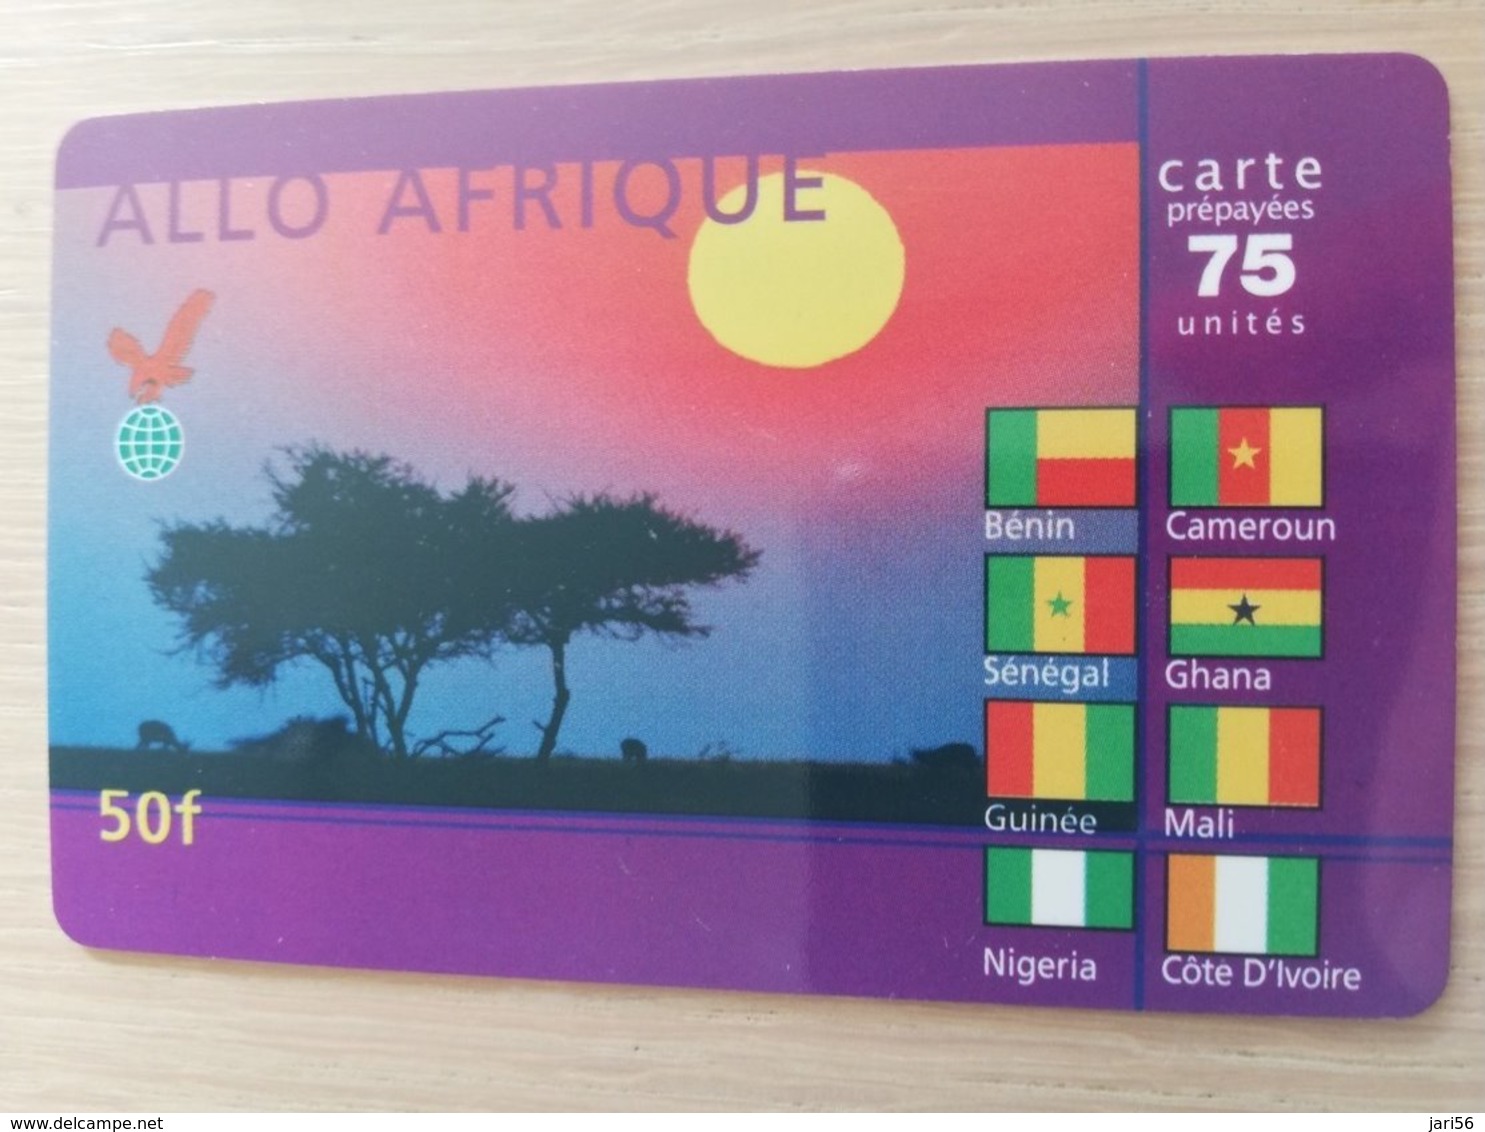 FRANCE/FRANKRIJK  ALLO   AFRICA  75 UNITS PREPAID  USED    ** 1509** - Nachladekarten (Handy/SIM)